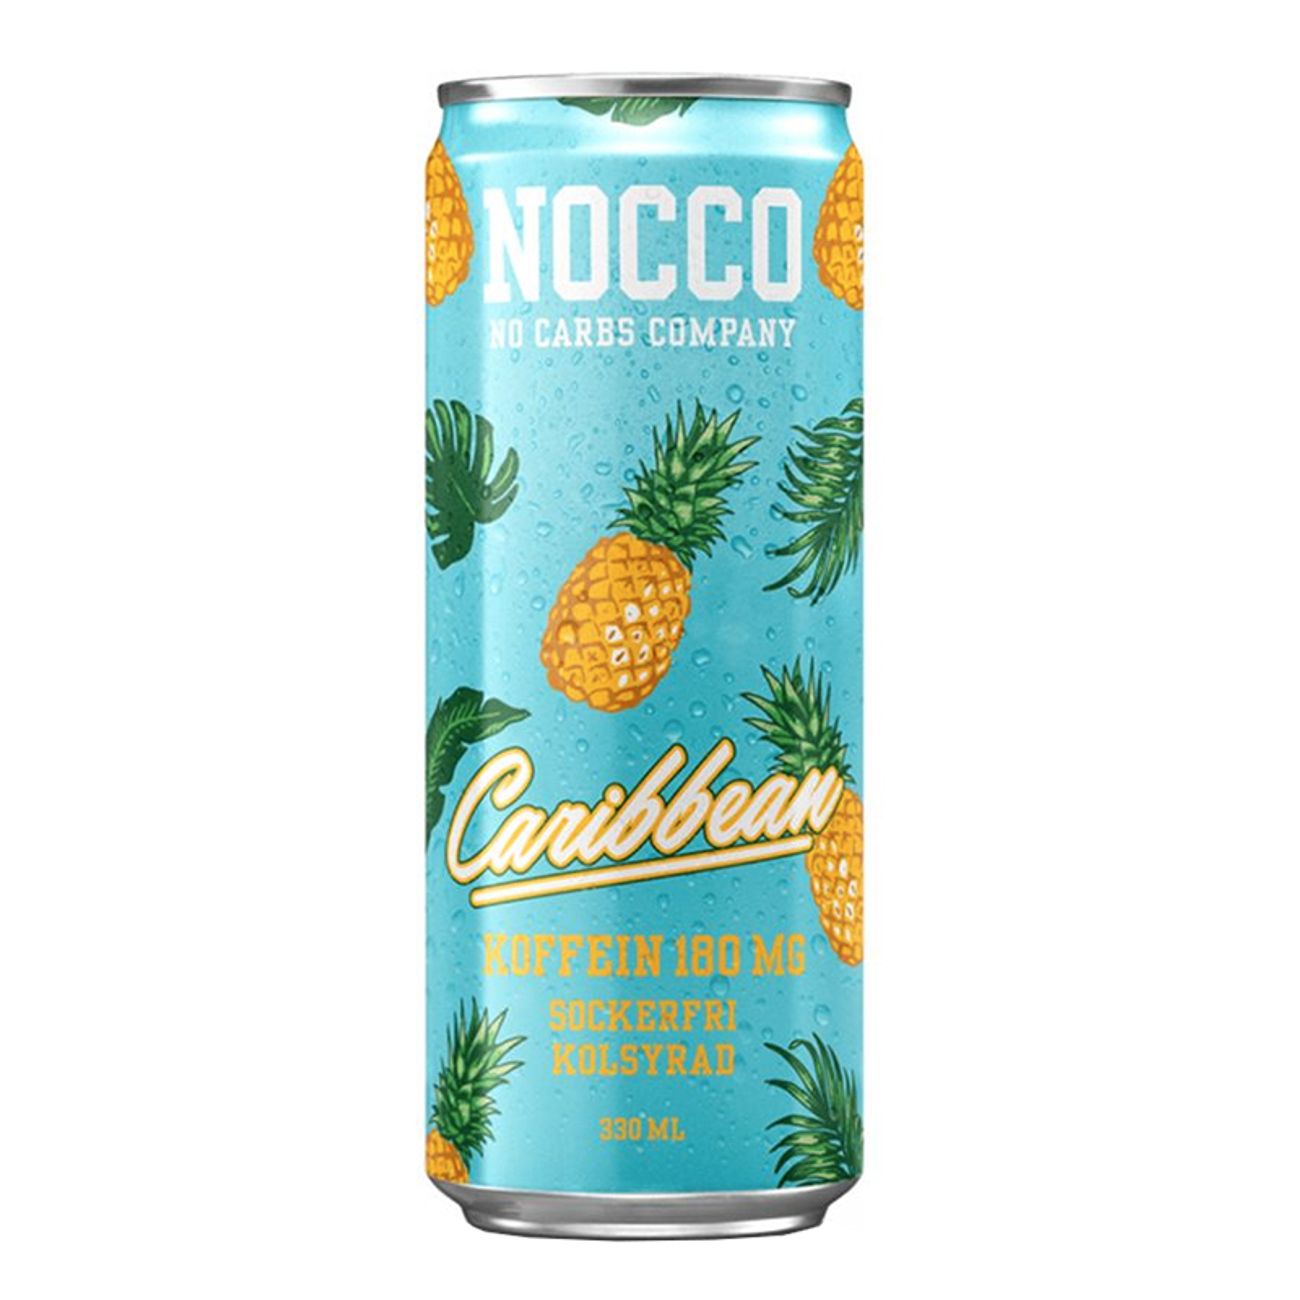 nocco-caribbean-5